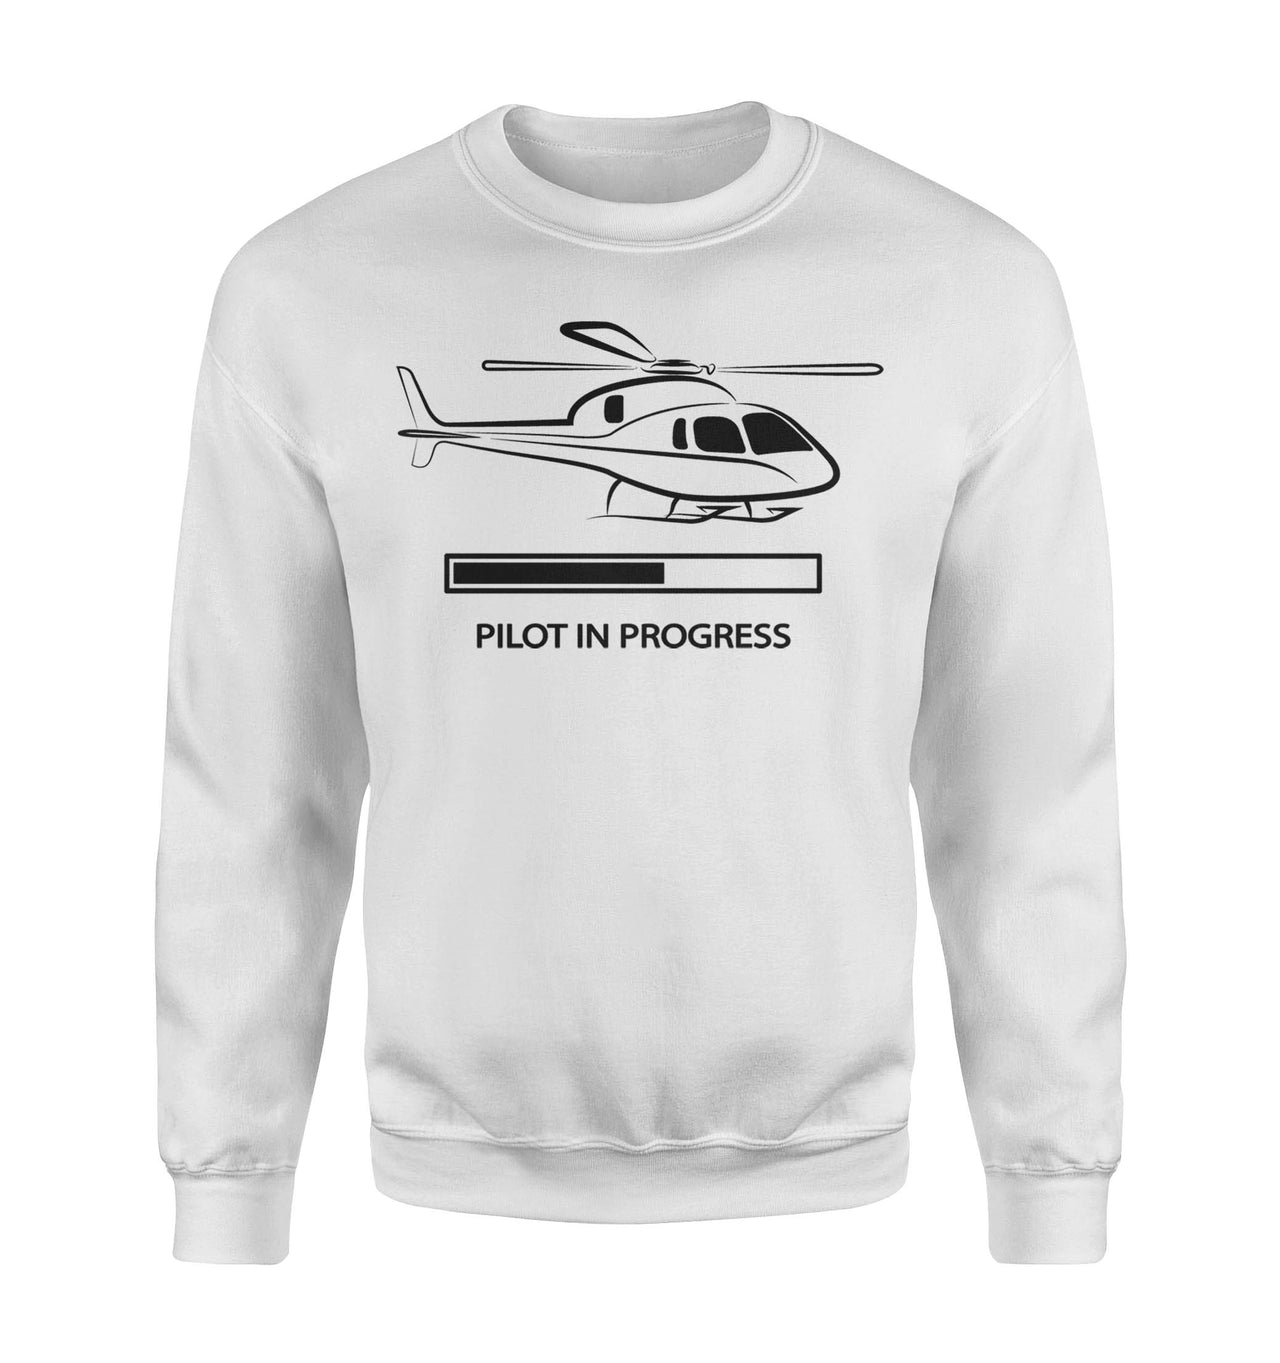 Pilot In Progress (Helicopter) Designed Sweatshirts